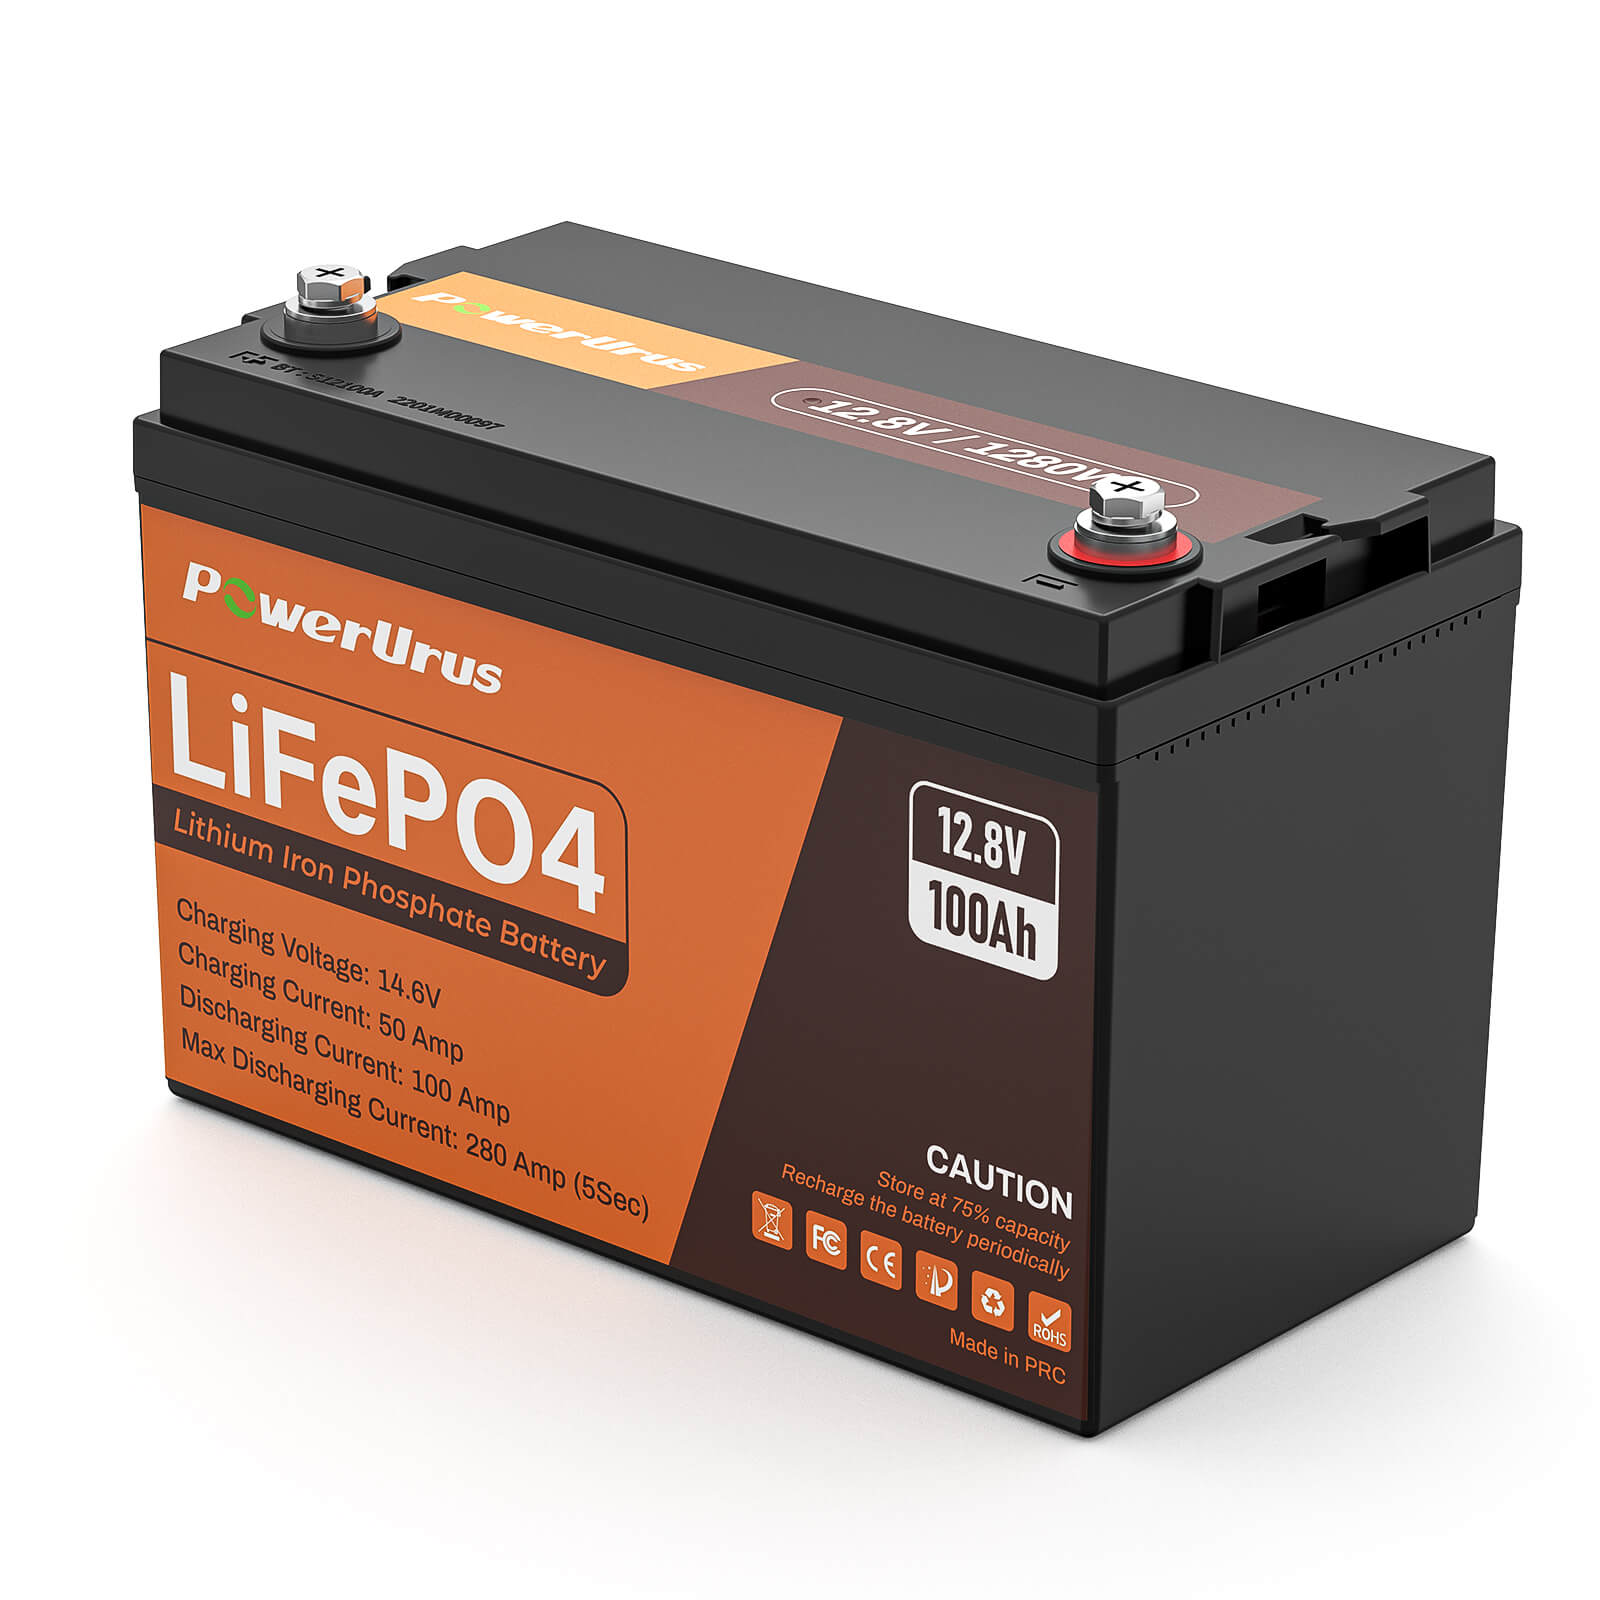 RoyPow S2450D 24V 50AH LiFePO4 battery for trolling motors